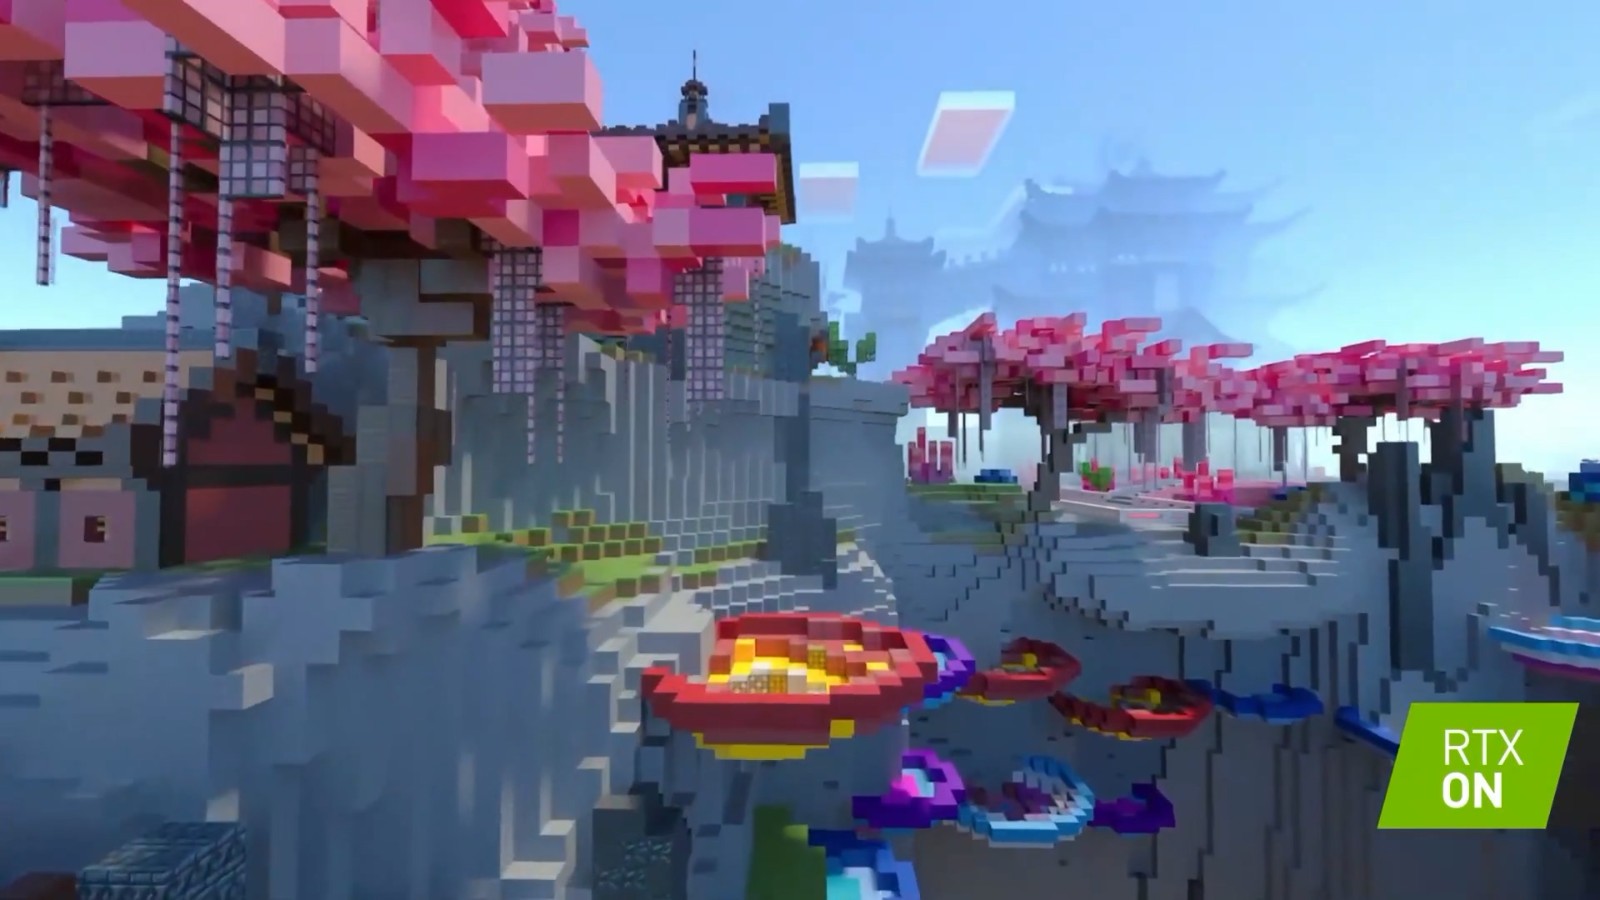 【Minecraft】我的世界 中国风建筑-新天堂(延时摄影/附地图) - JerenVids_哔哩哔哩_bilibili